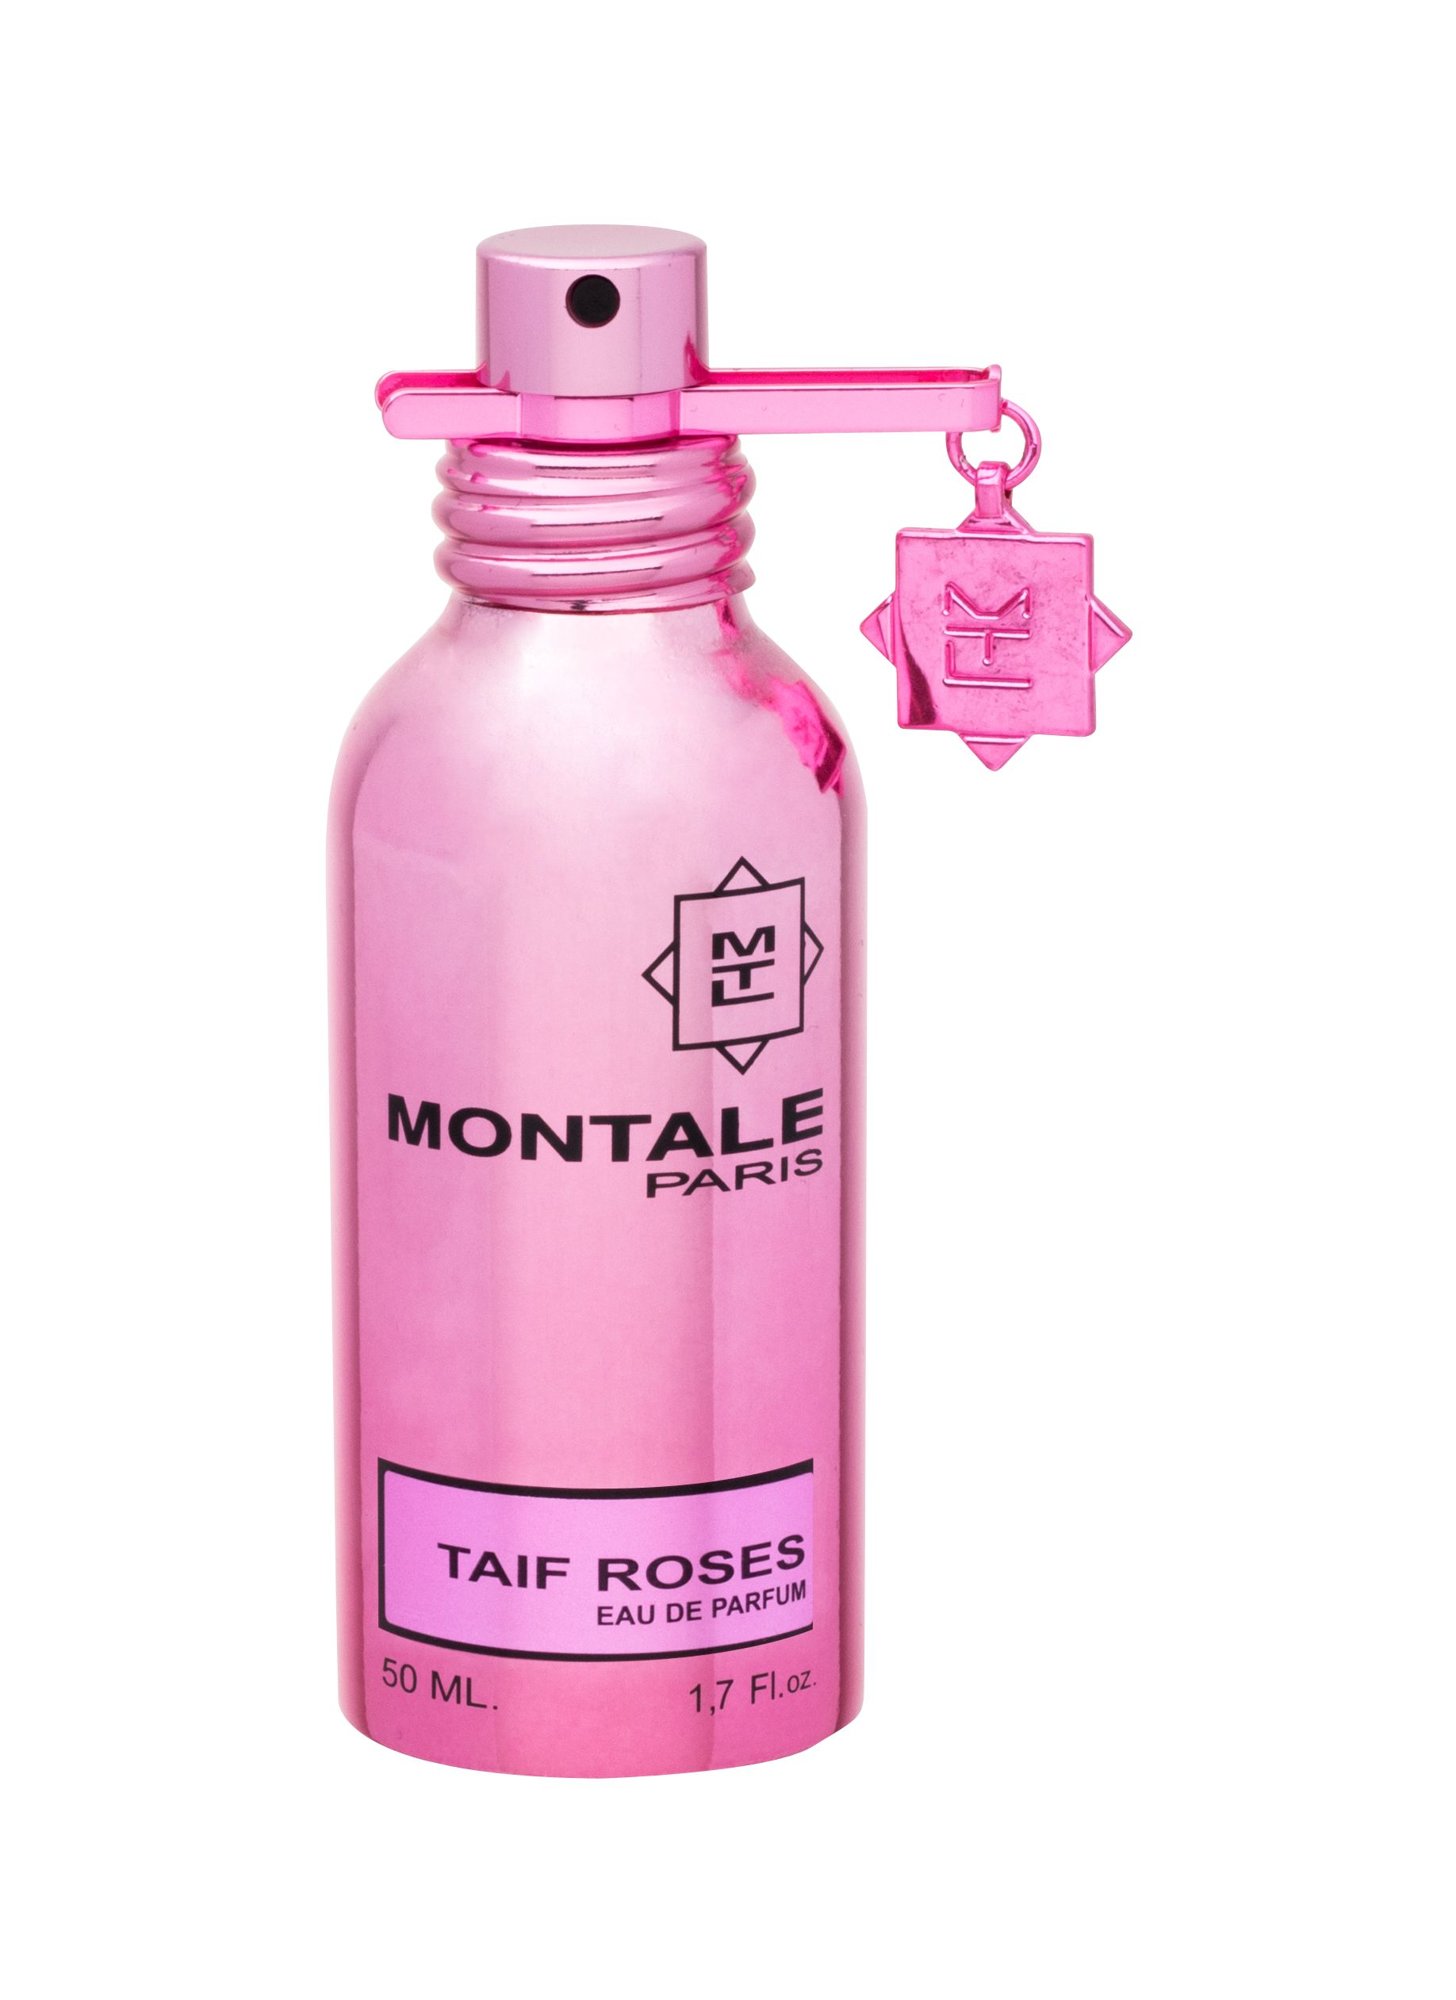 Montale Paris Taif Roses